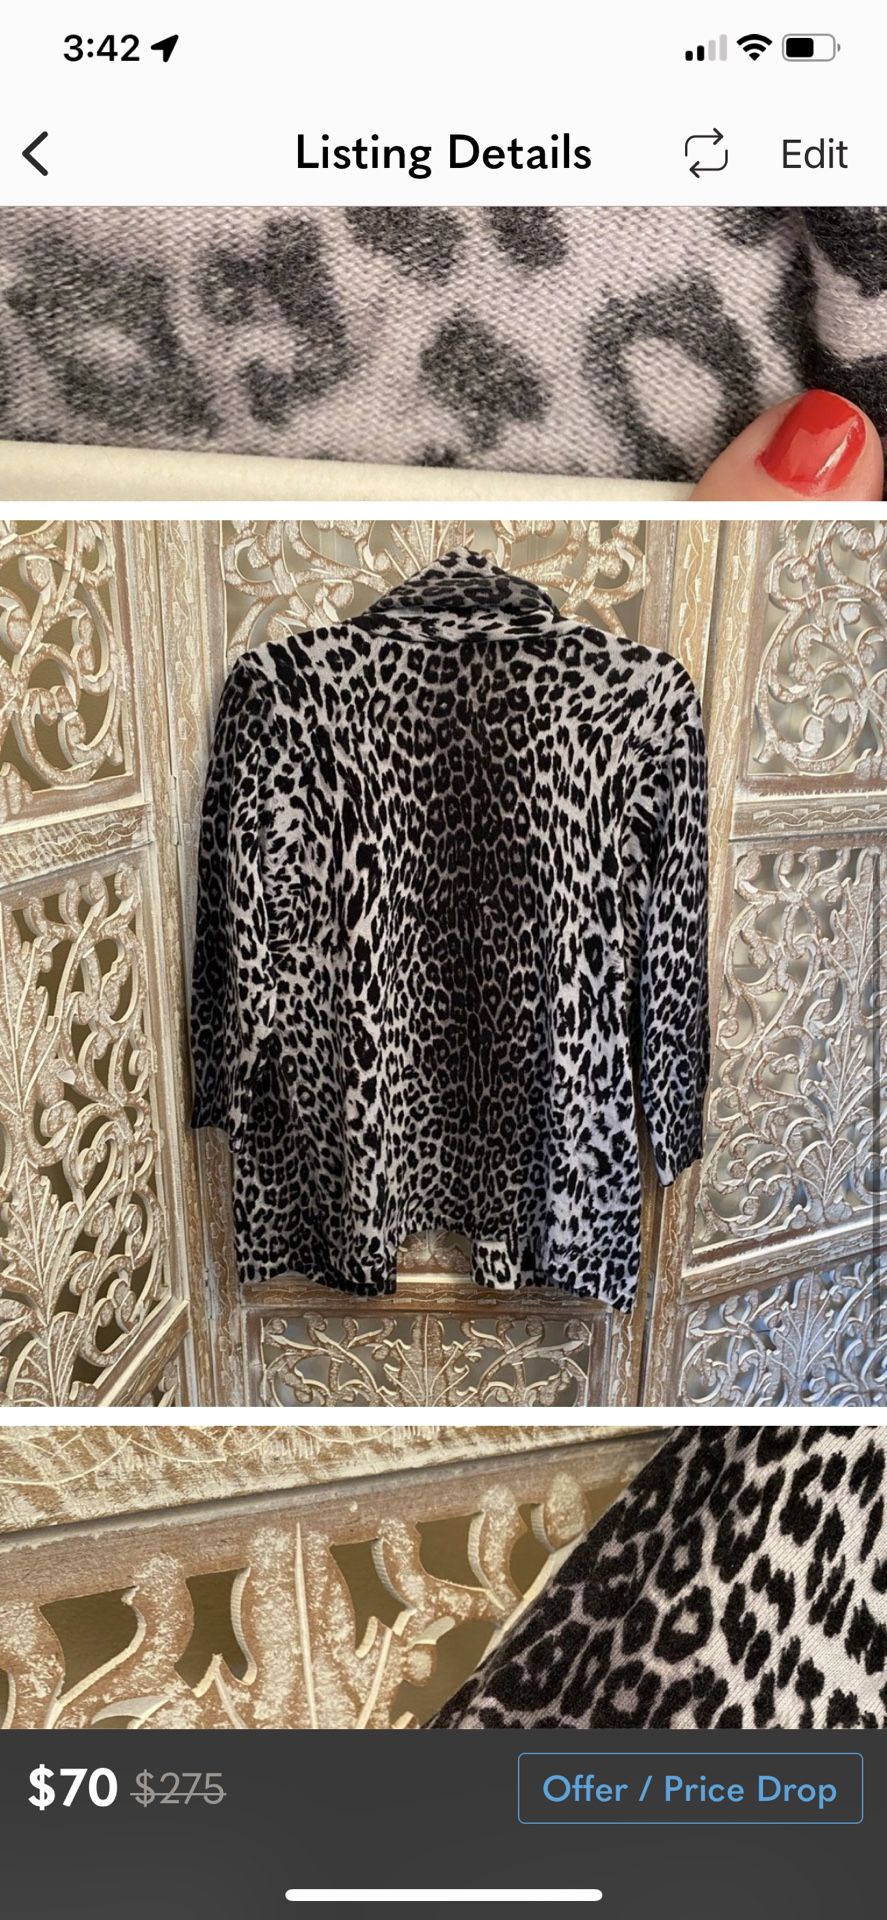 Neiman Marcus cashmere collection leopard print size large